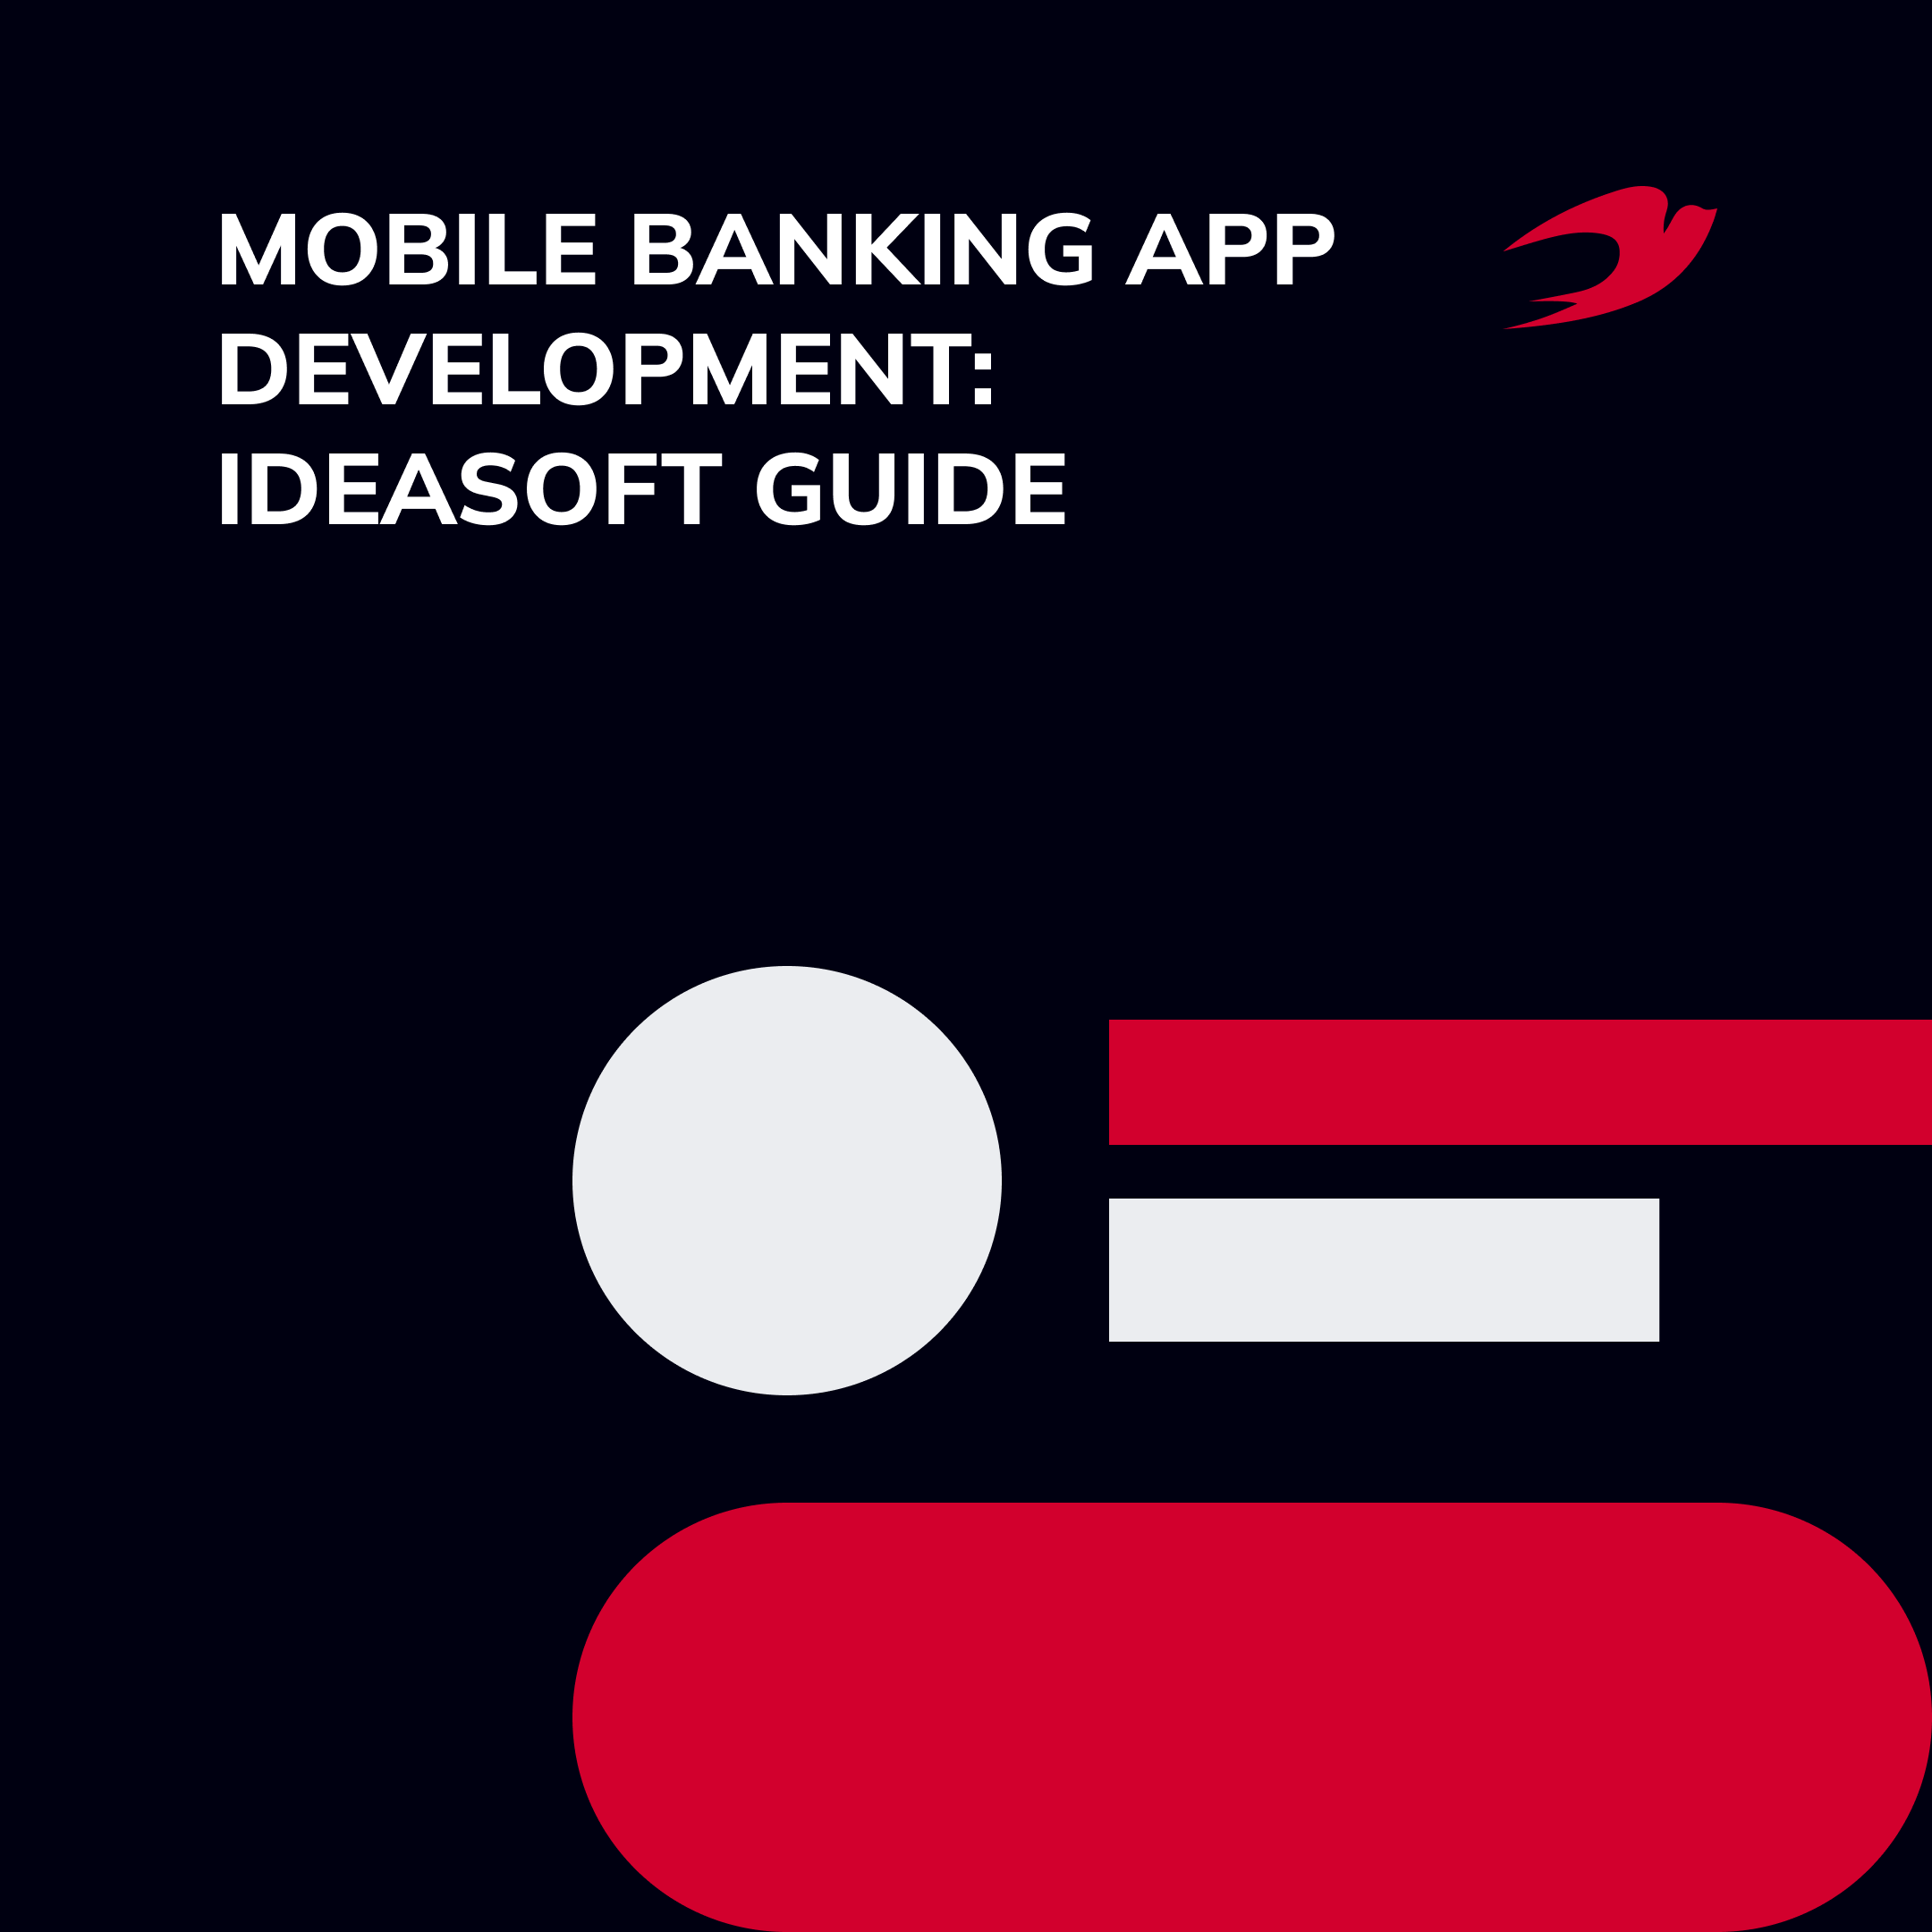 Mobile Banking App Development: IdeaSoft Guide